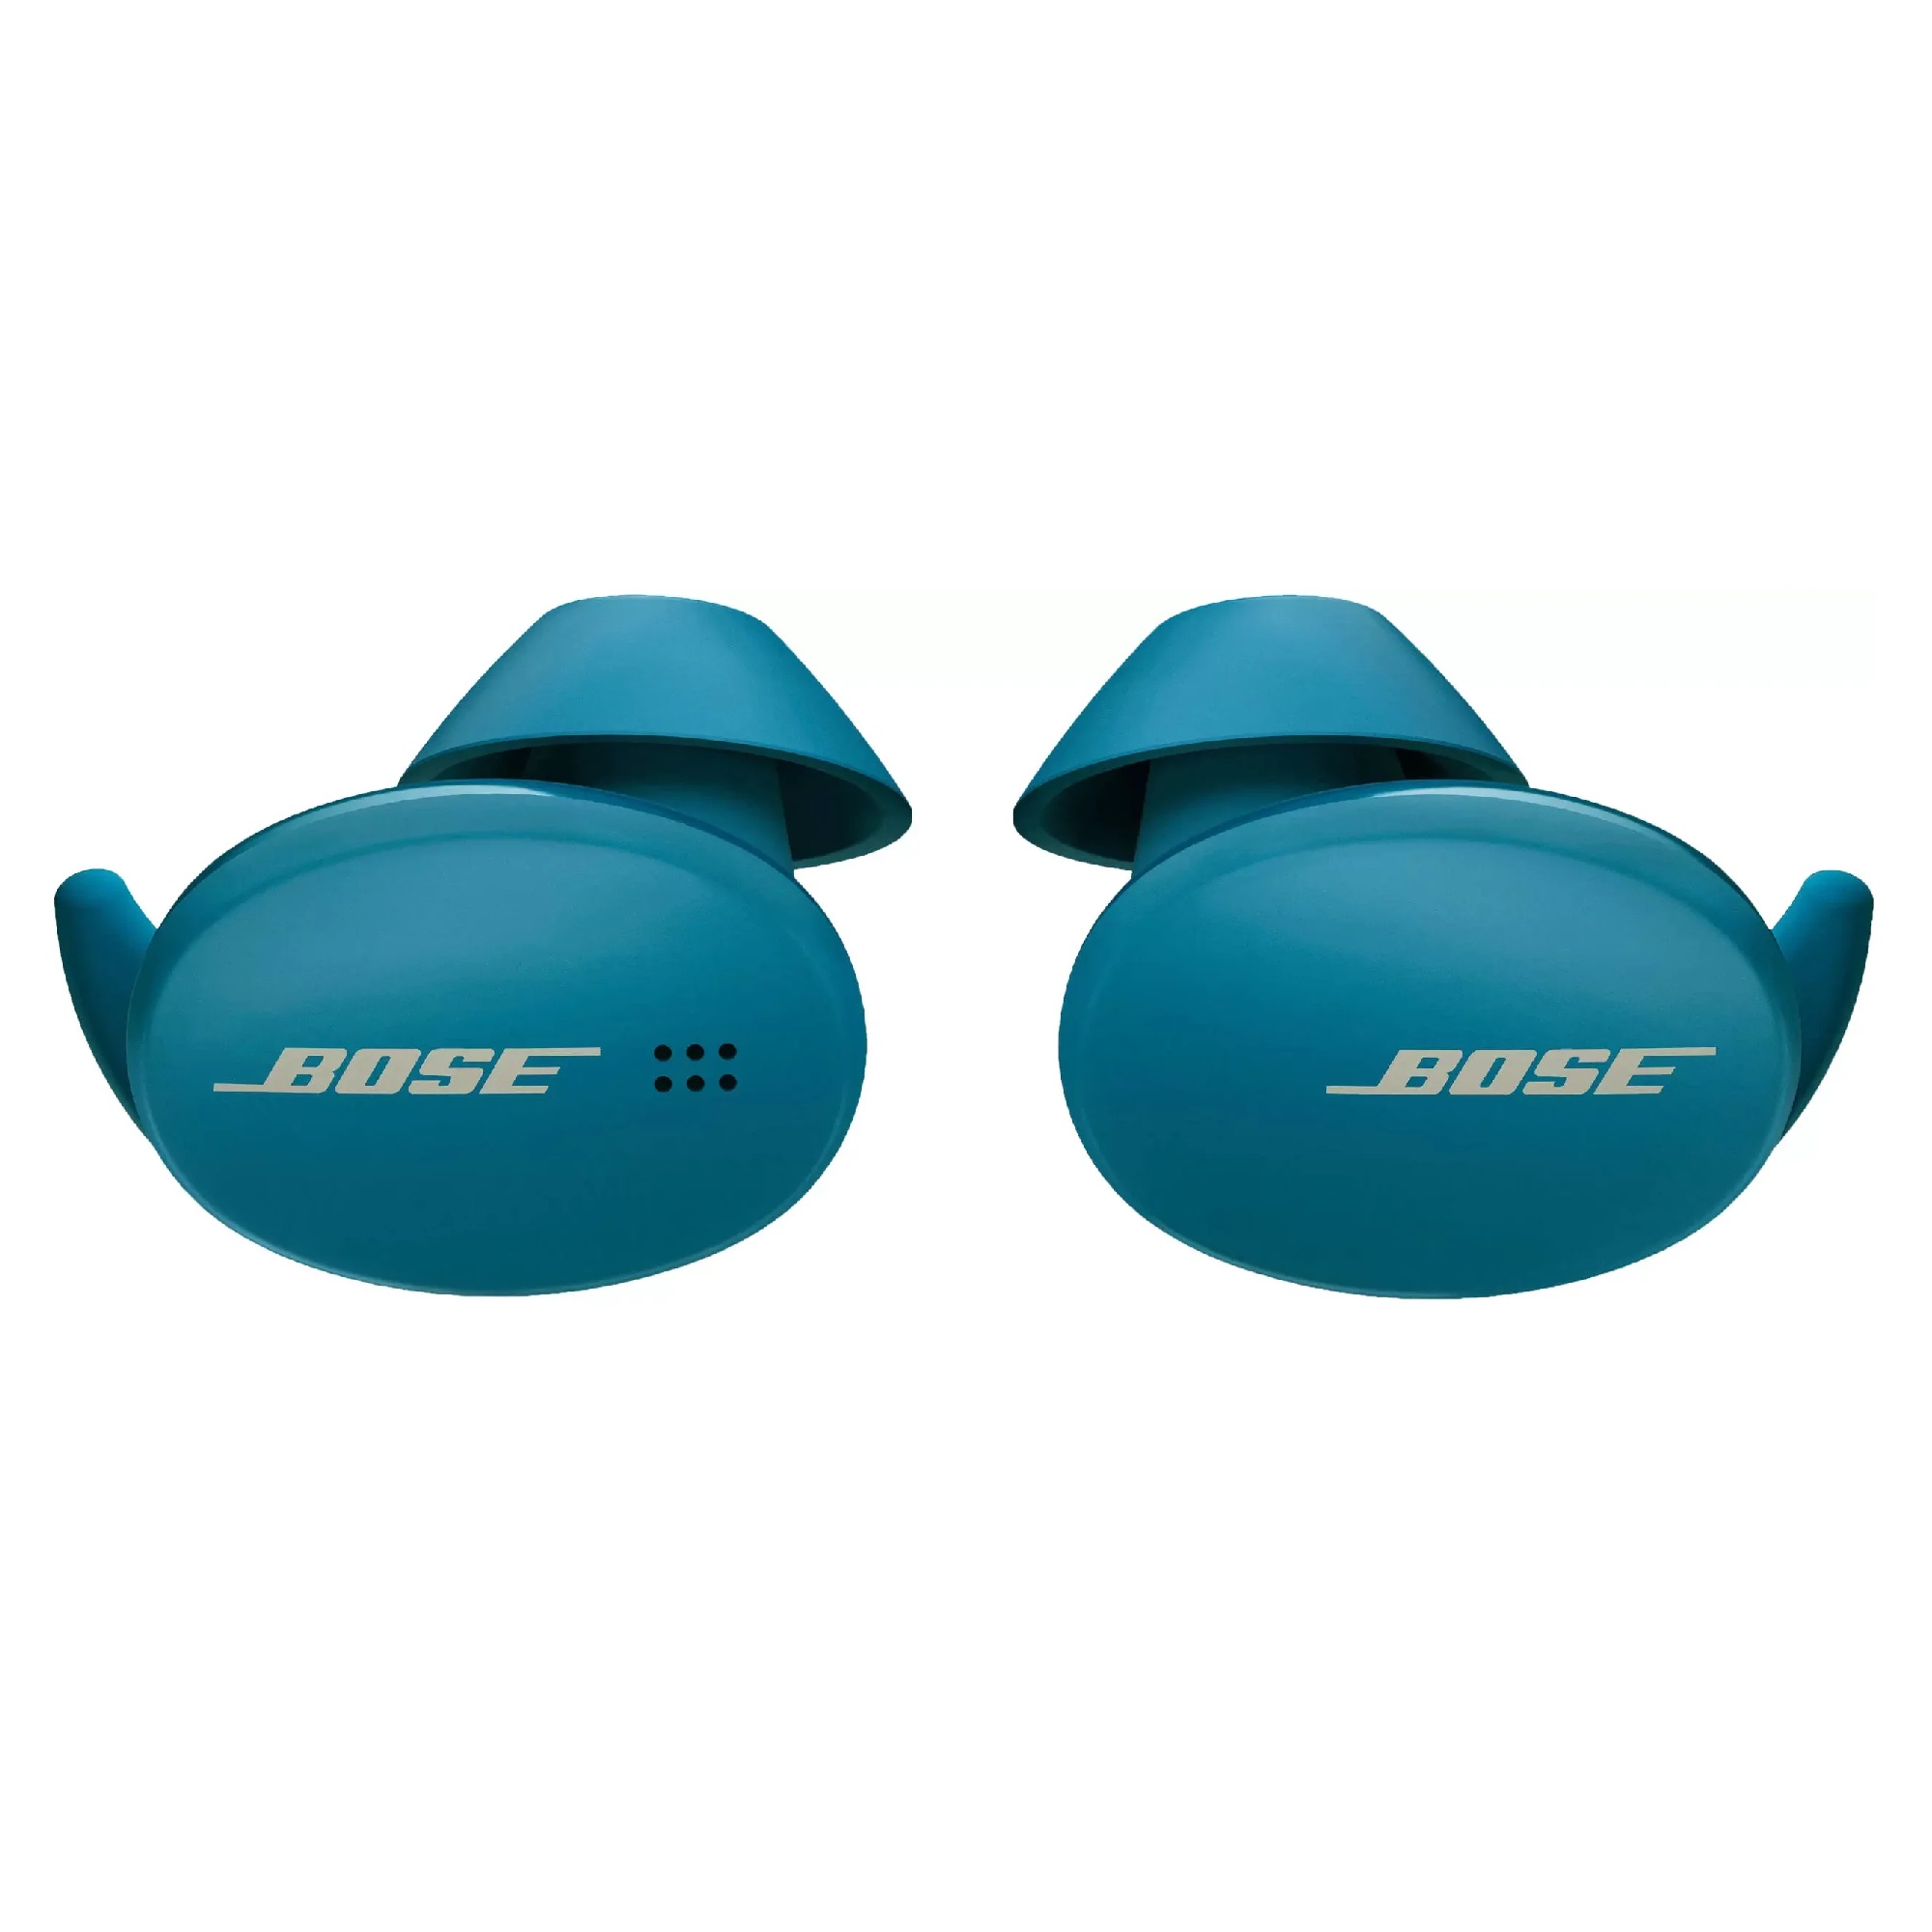 Bose sports earbuds. Bose Sport Earbuds. Bose Sport Earbuds Baltic Blue. Bose наушники беспроводные Sport. Беспроводные наушники Bose Sport Earbuds Blue.